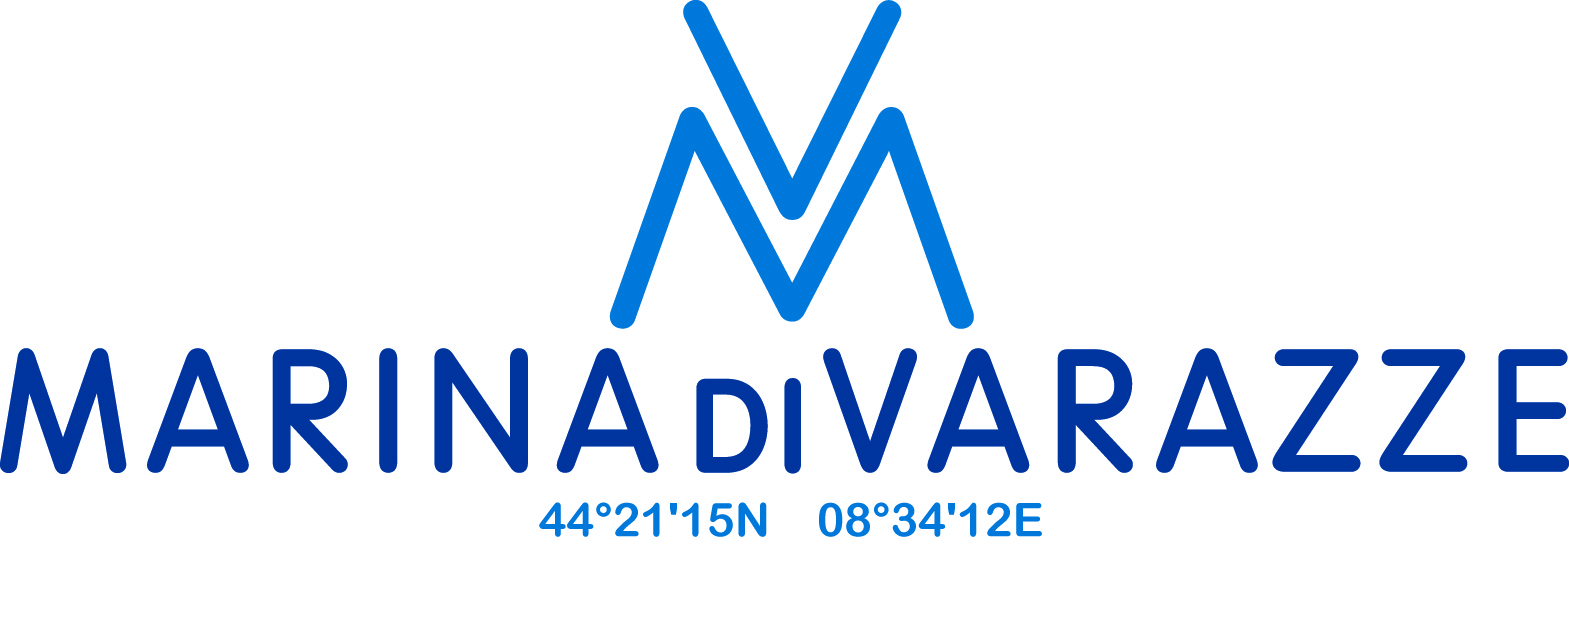 Marina-di-Varazze-logo